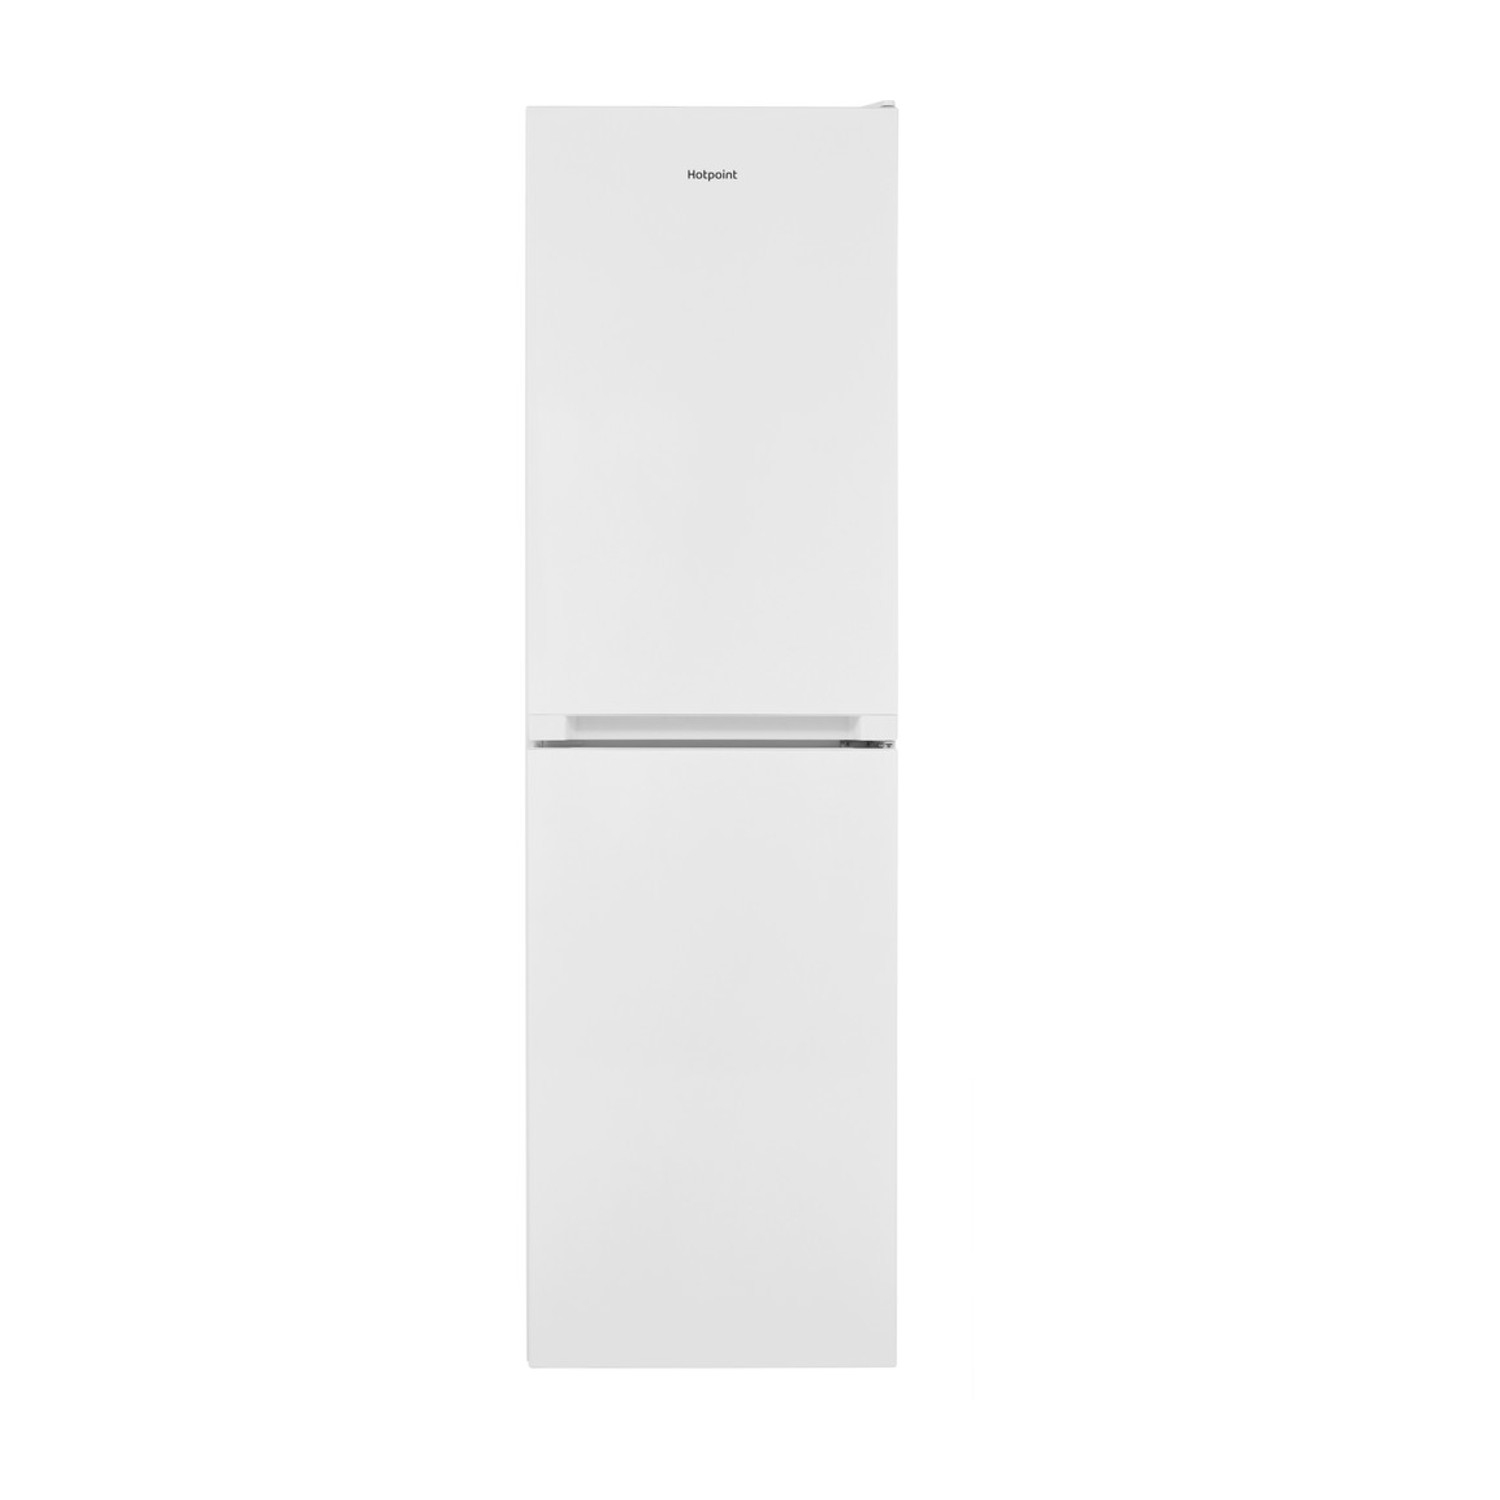 Hotpoint Frost Free Fridge Freezer, 183cm high by 55cm wide, White  - 0